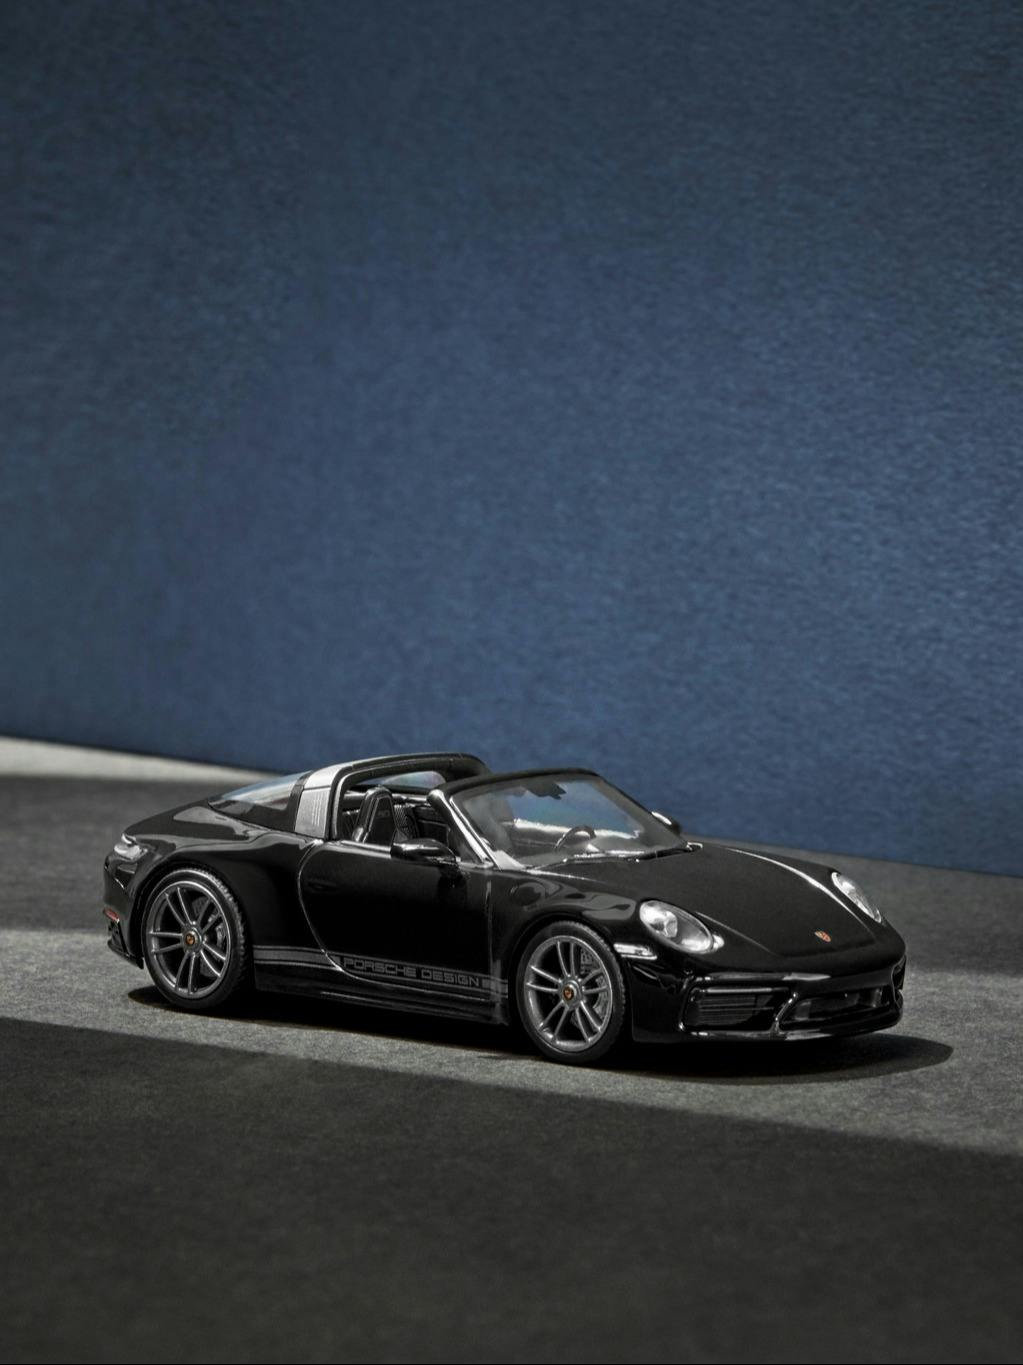 Buy Porsche cars with Trailer online